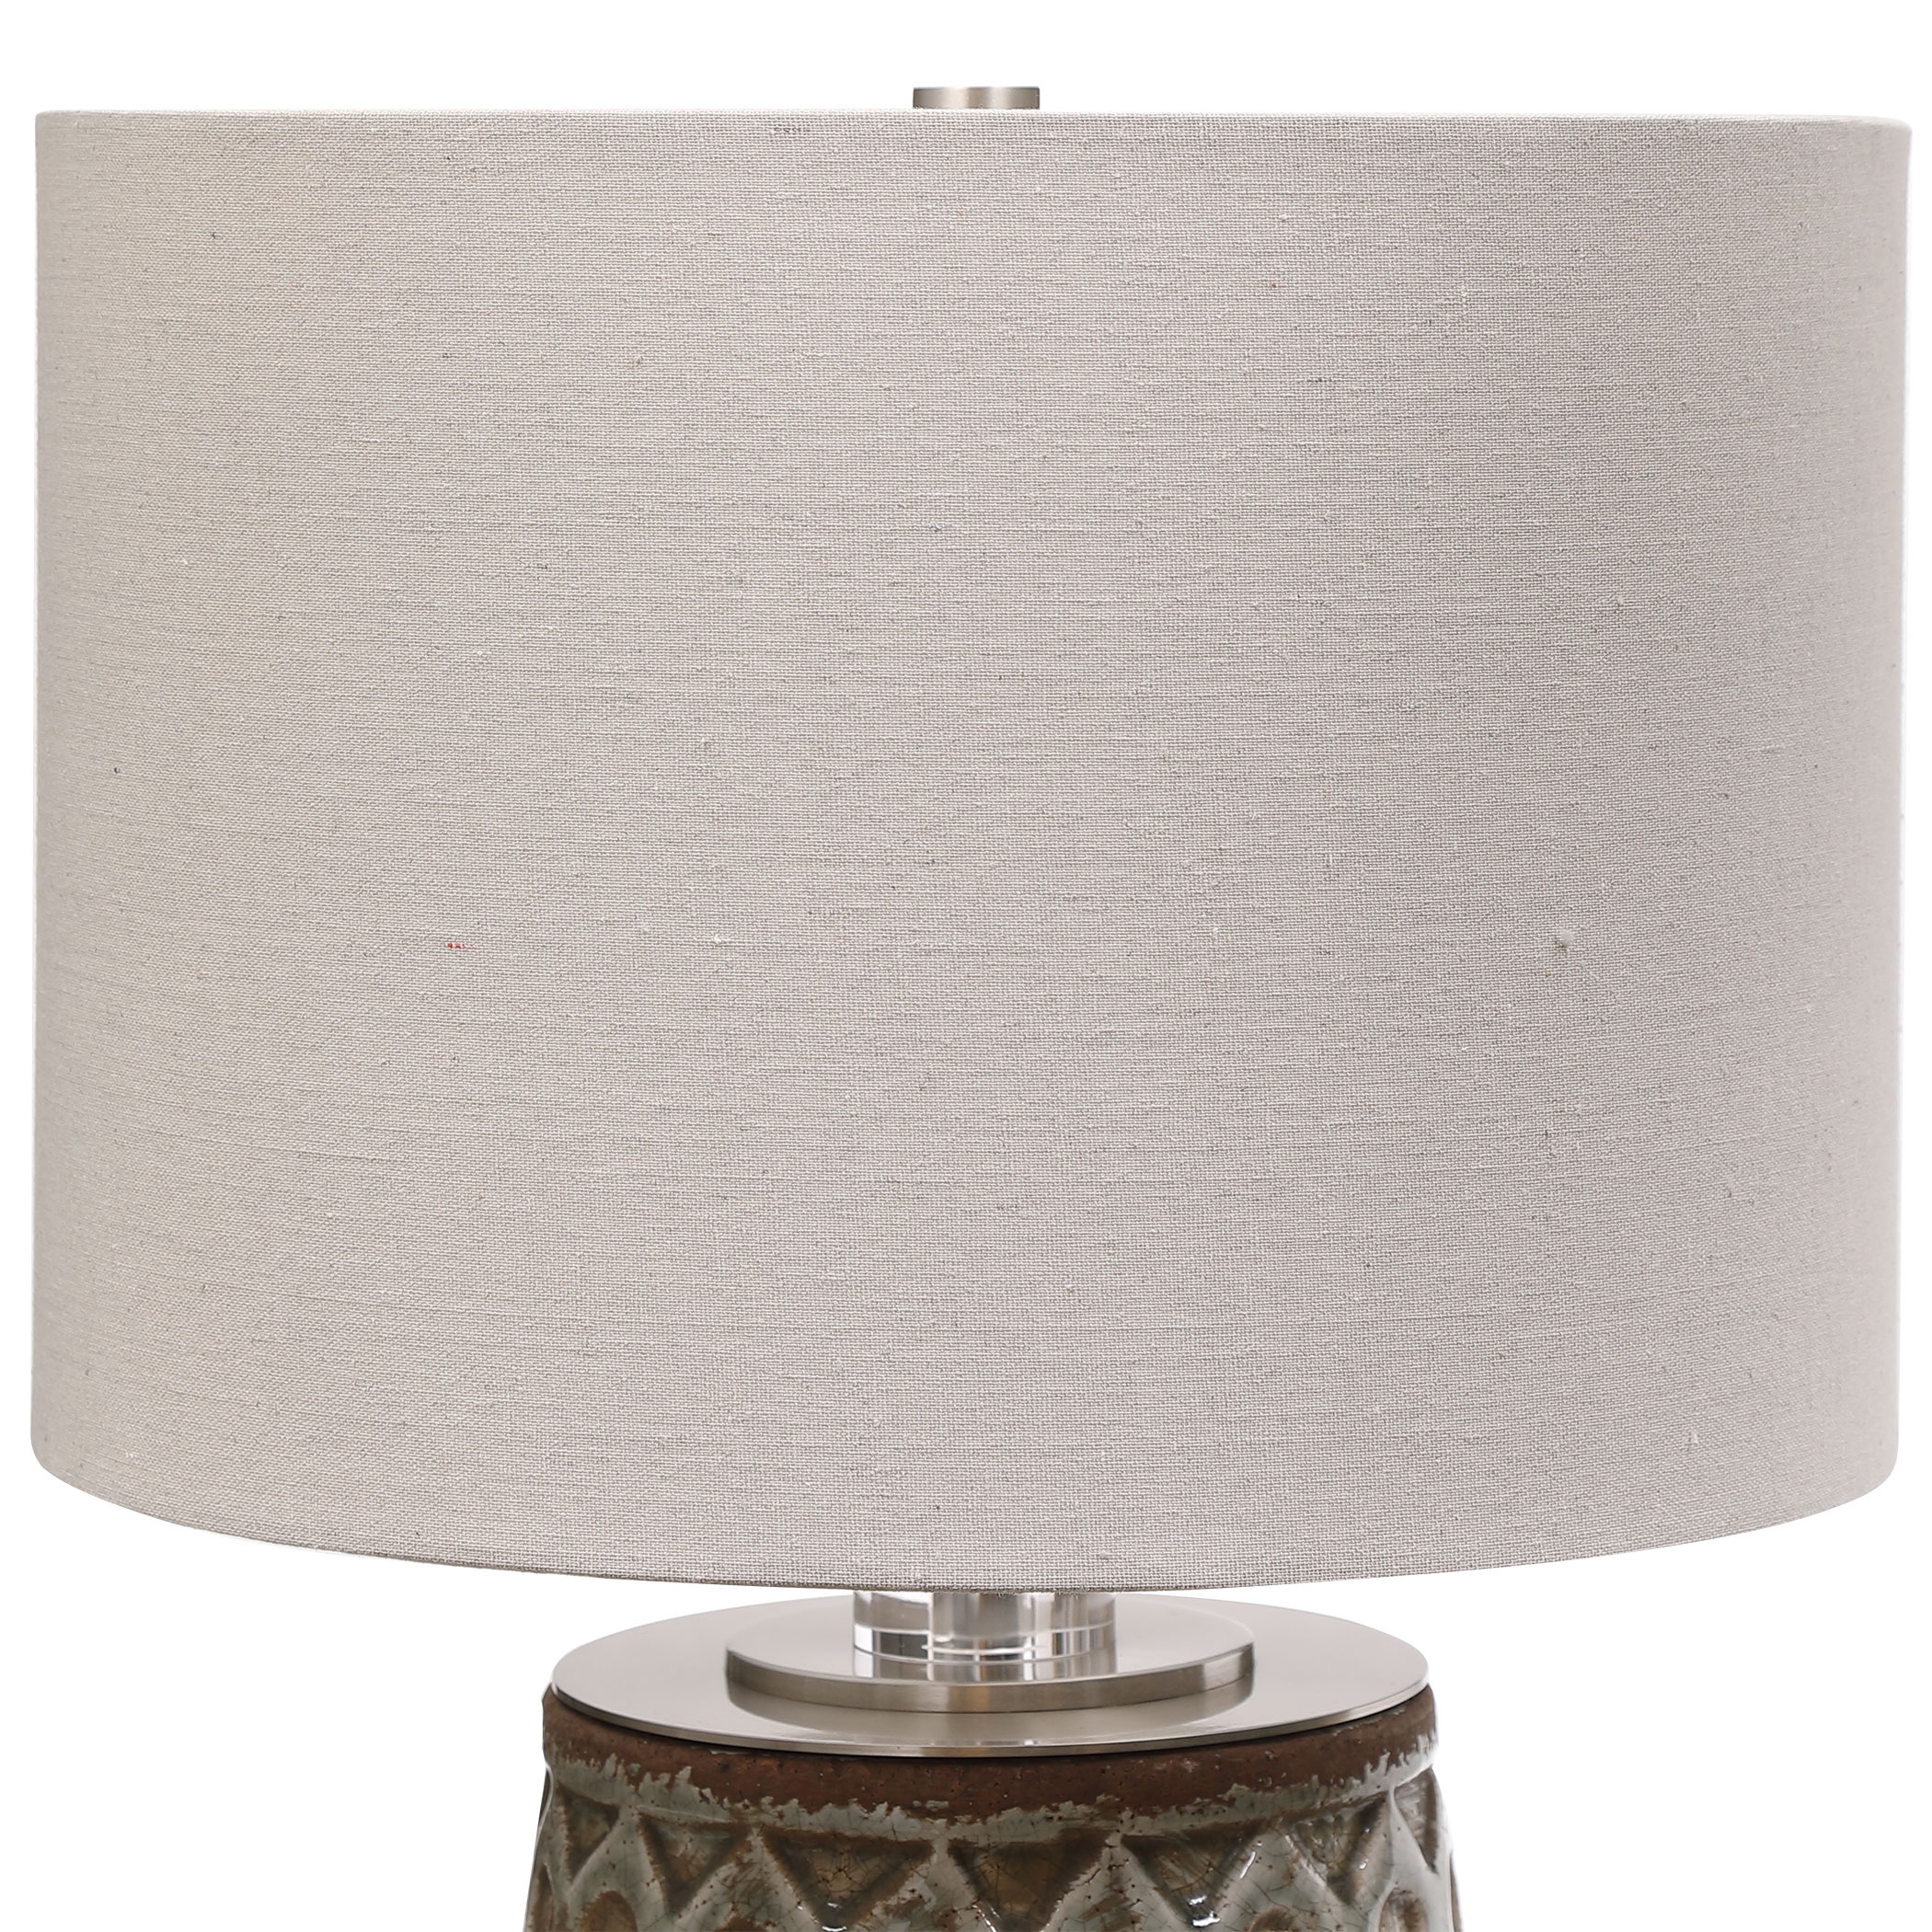 Cetona Old World Table Lamp - Image 2